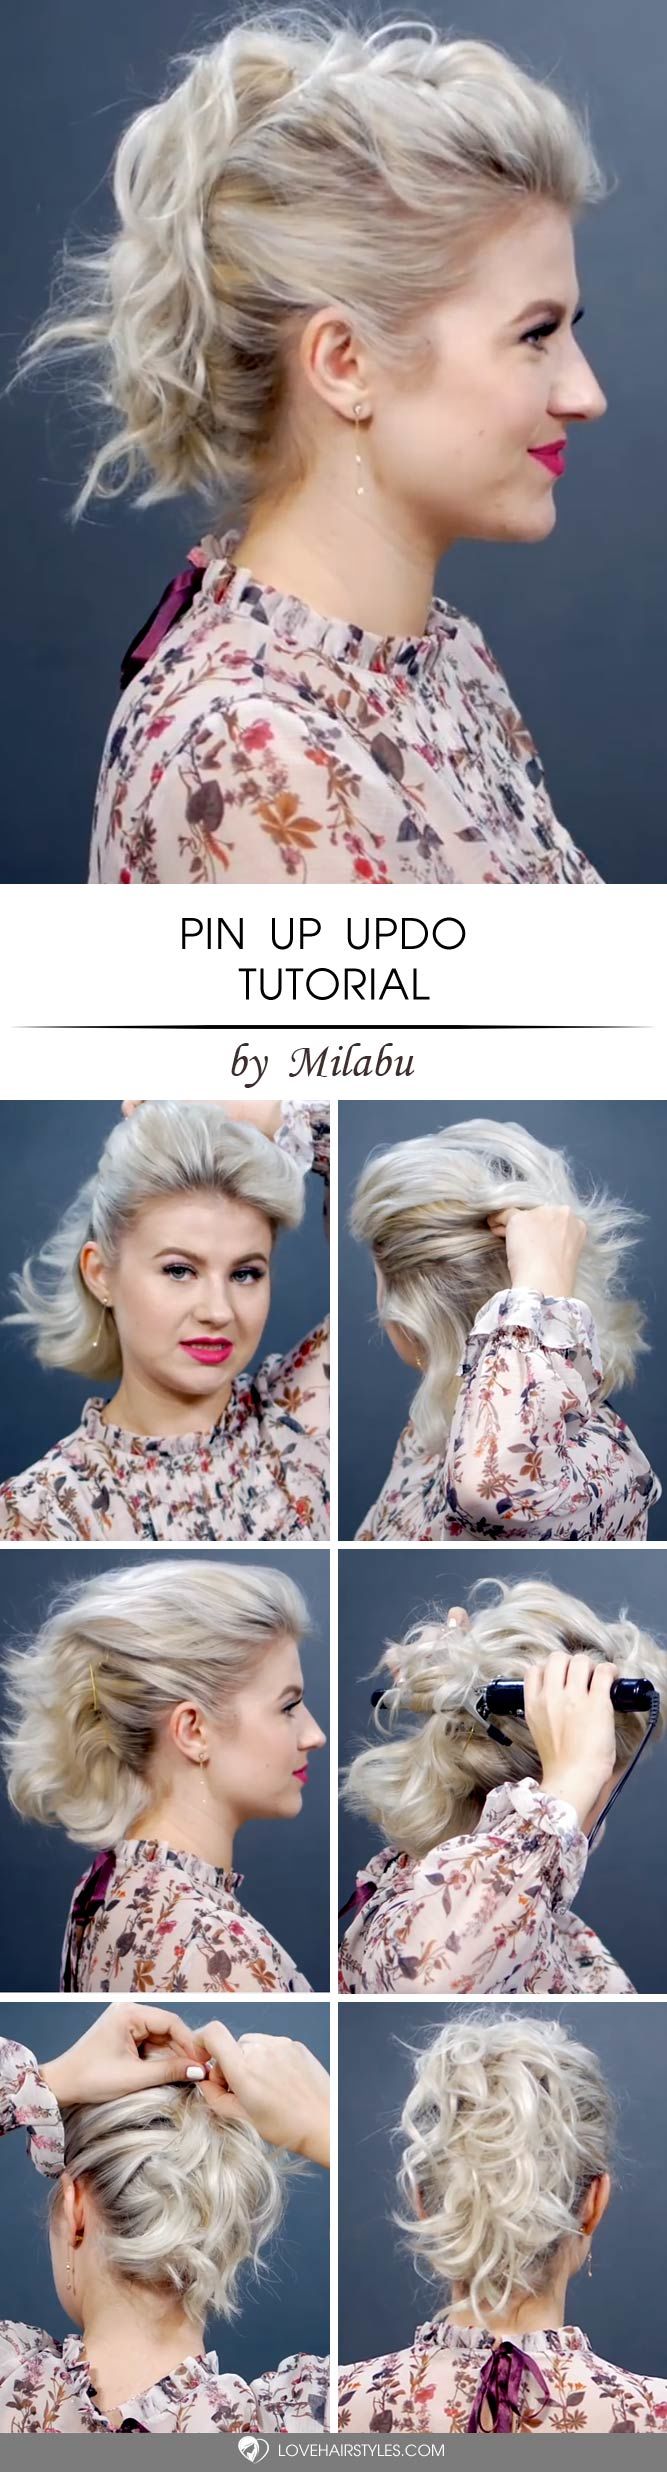 Pin Up Updo Tutorial #updo #hairtutorial